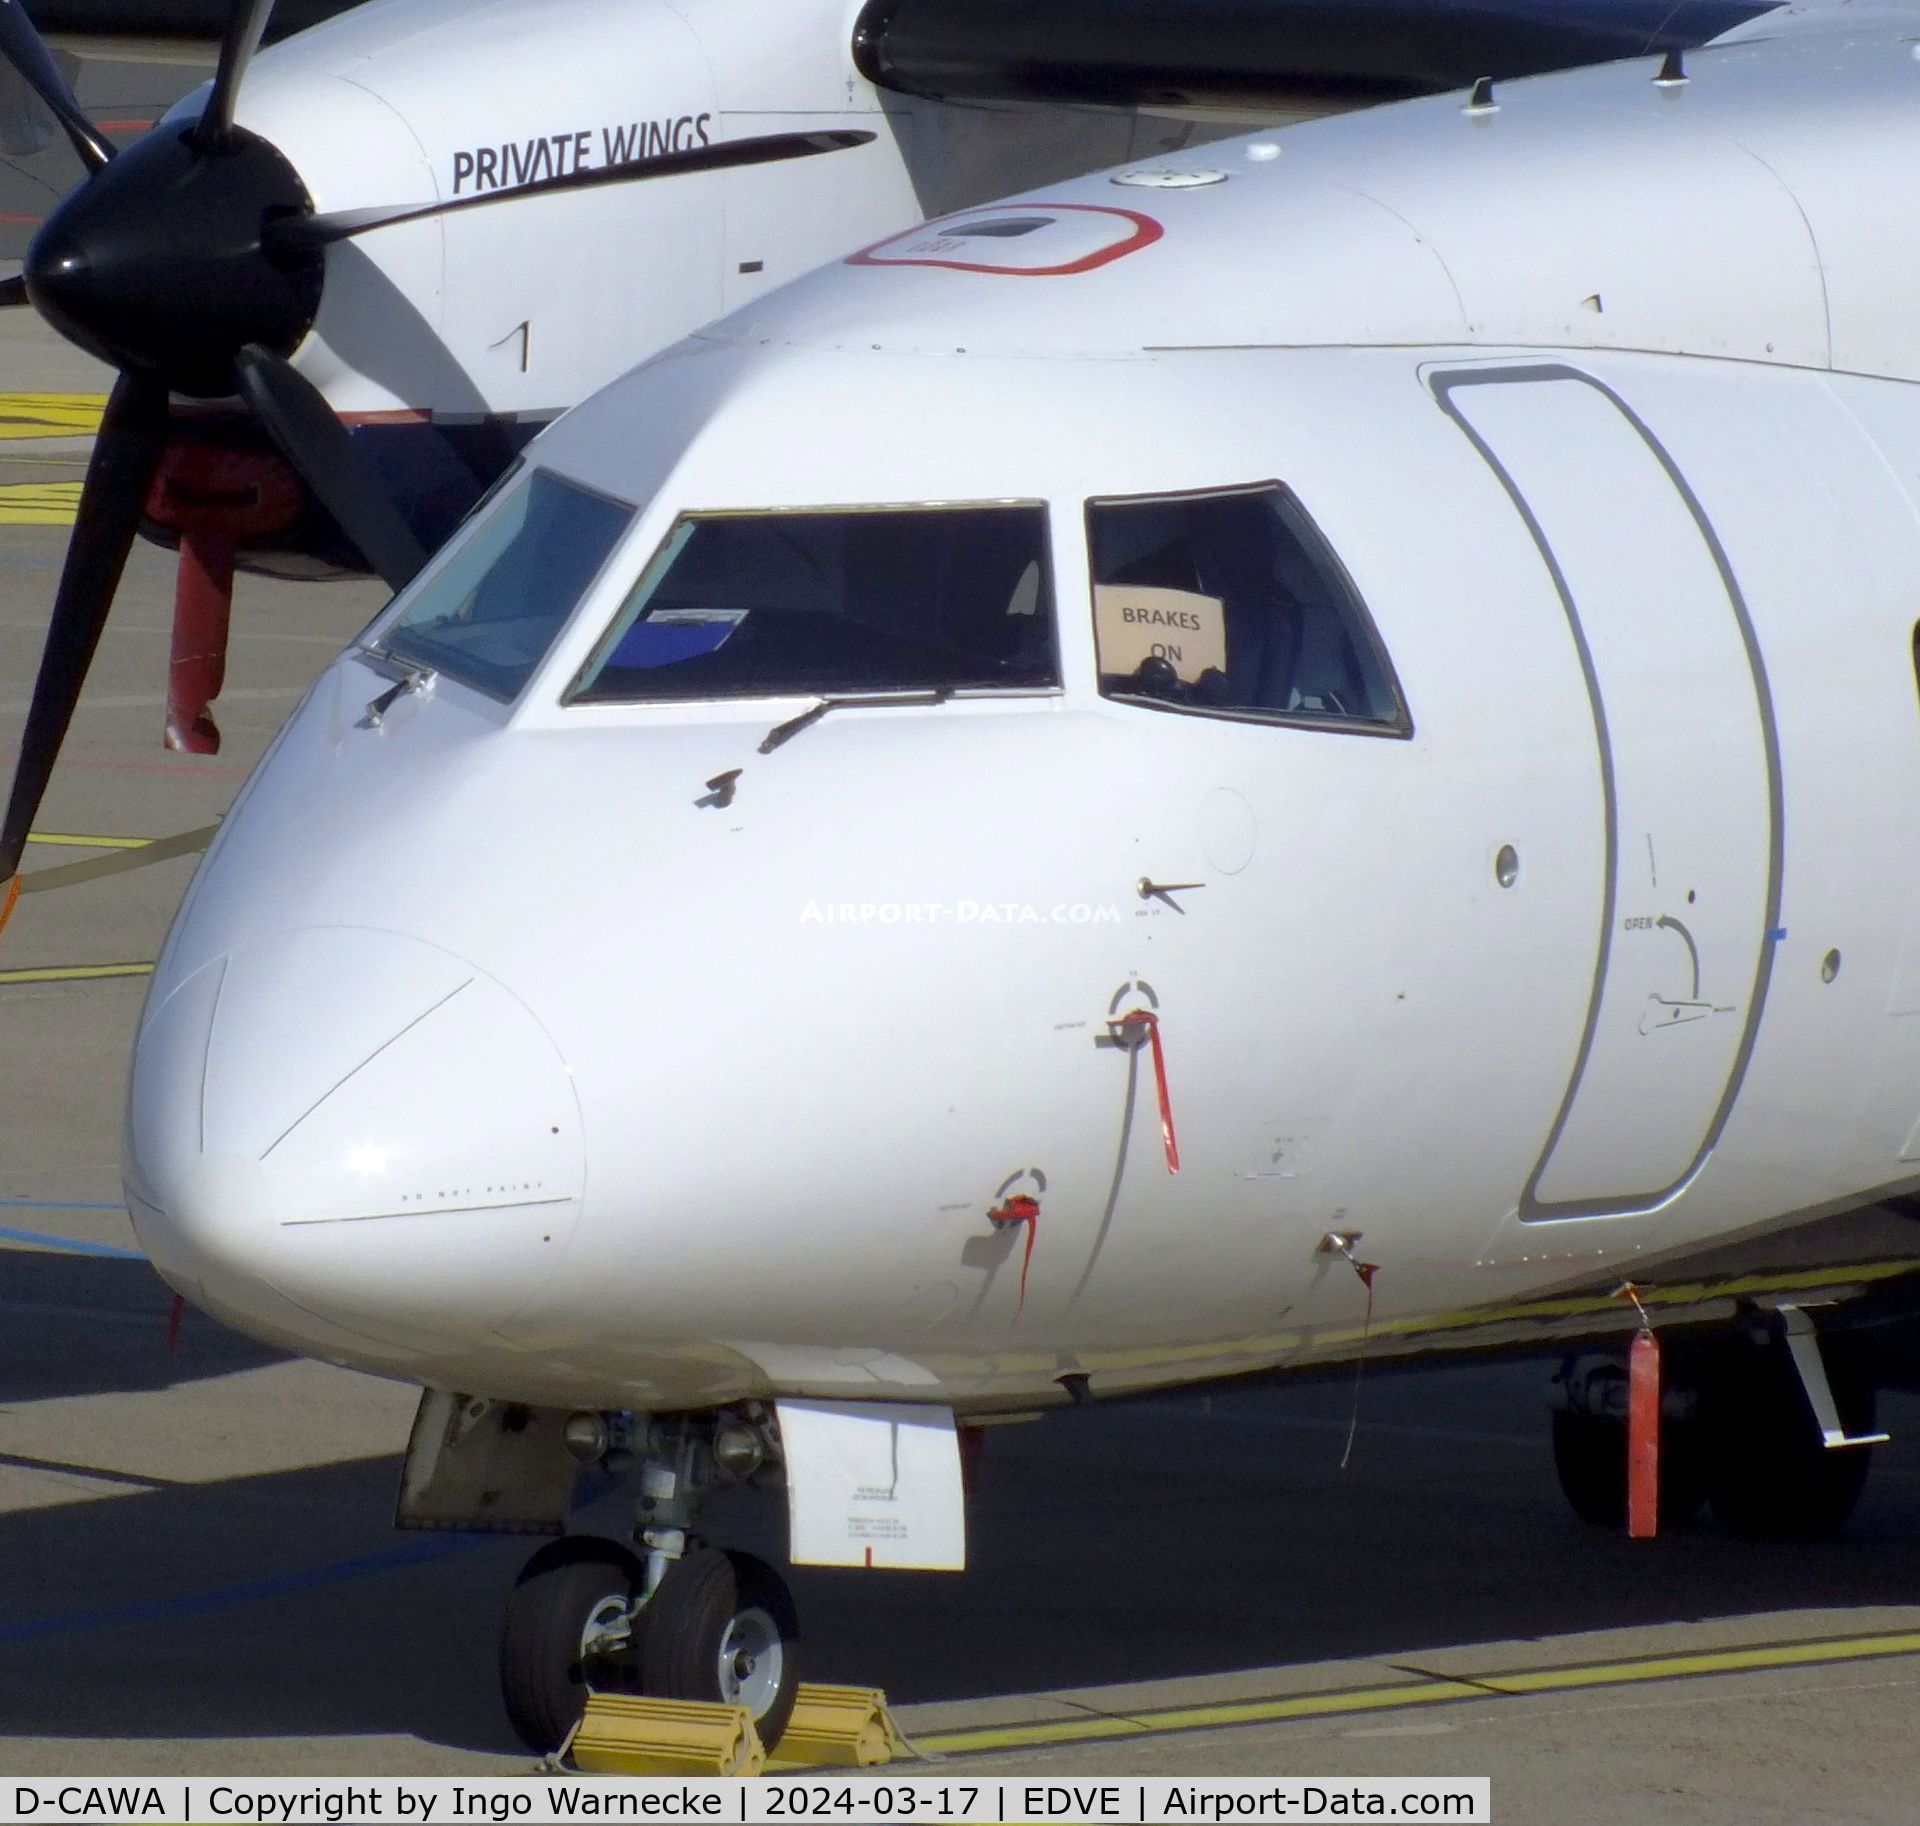 D-CAWA, 1999 Dornier 328-110 C/N 3119, Dornier 328-110 of Private Wings at Braunschweig/Wolfsburg airport, Waggum